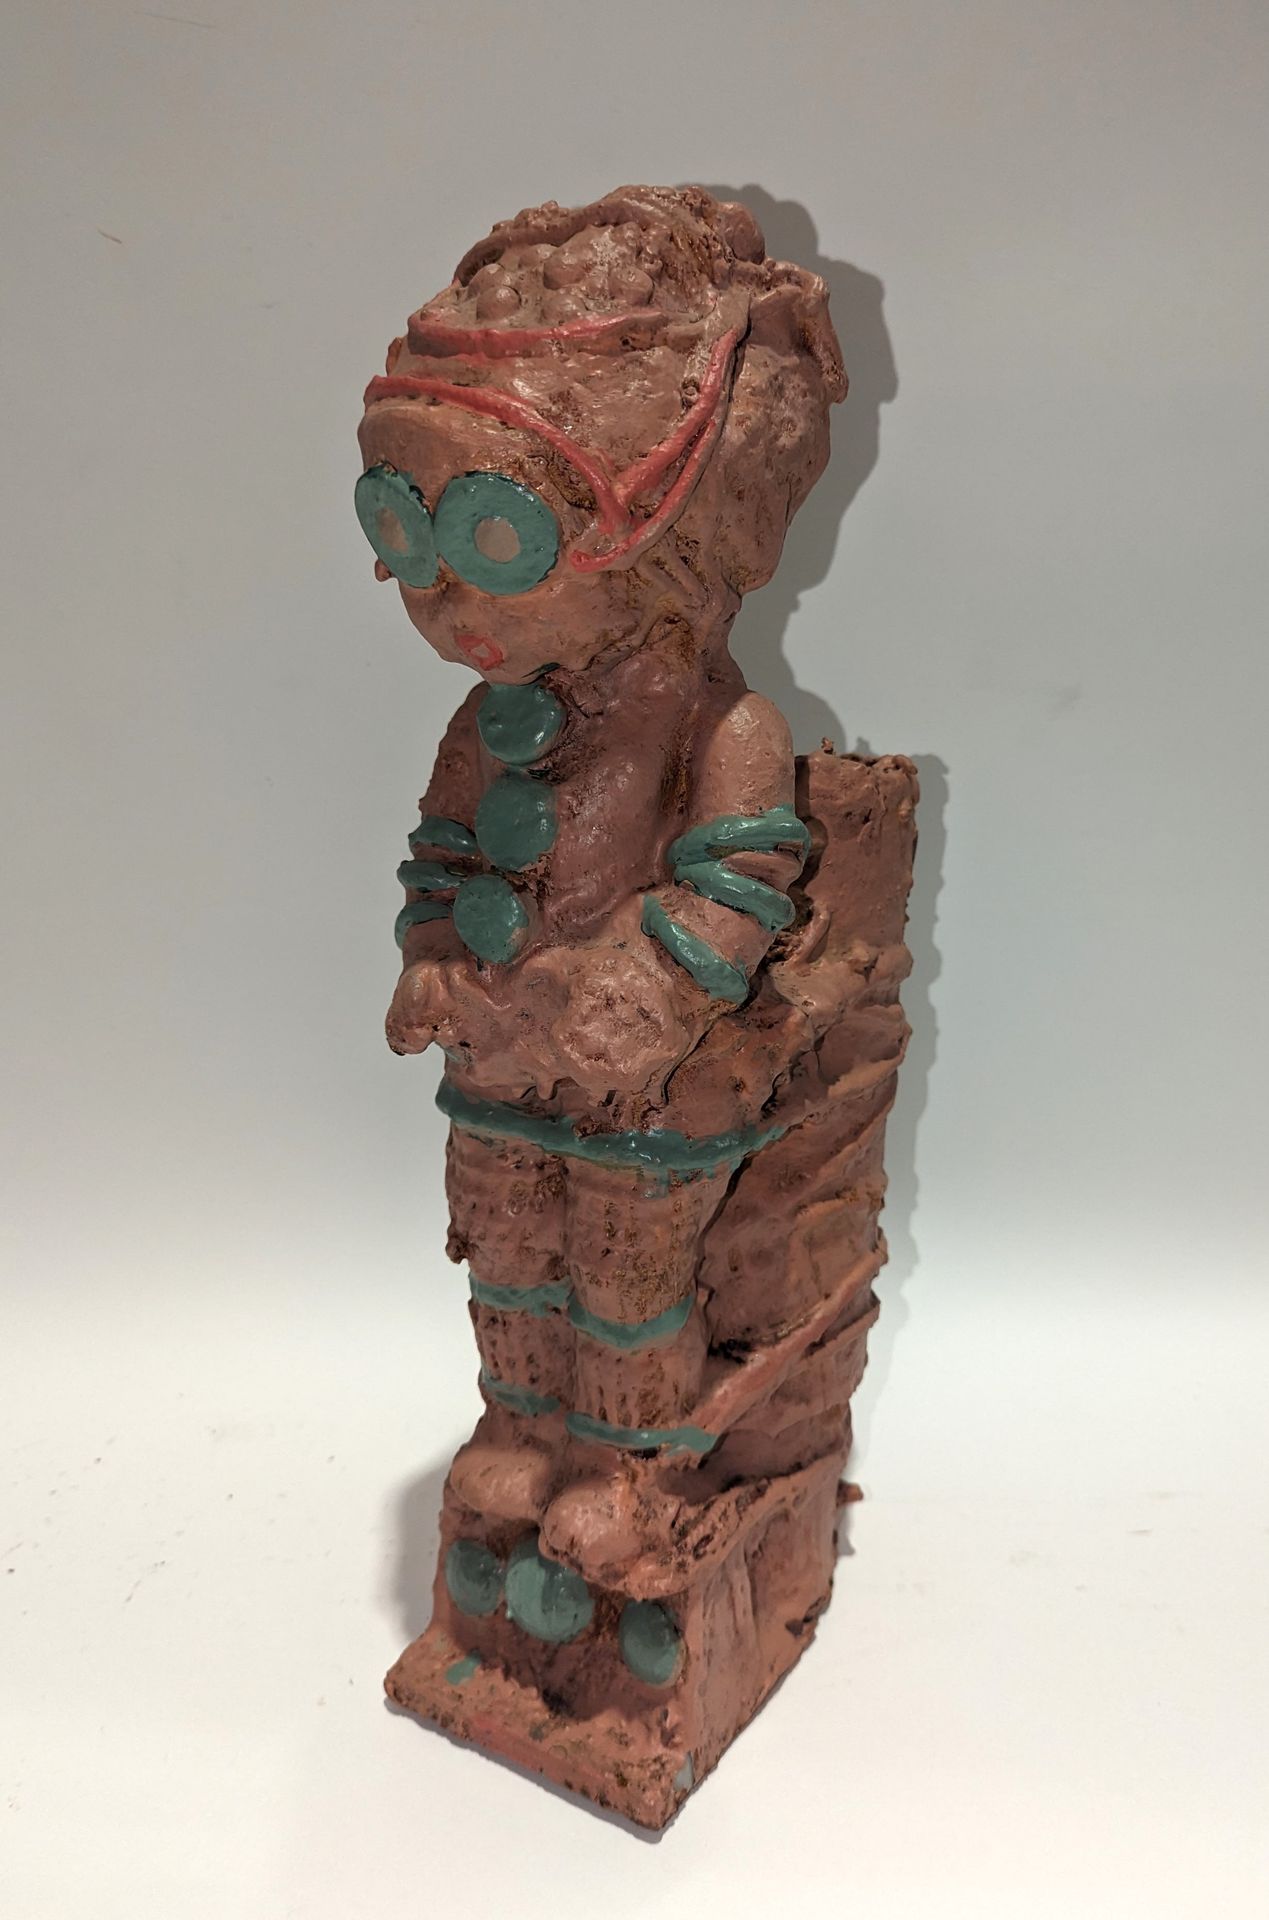 Null 米拉贝尔-多尔斯 (1913-1999)
人物塑像 
雕塑、混合媒体和绘画
车间销售印章
高43，宽13，深20厘米
损坏和丢失的部分